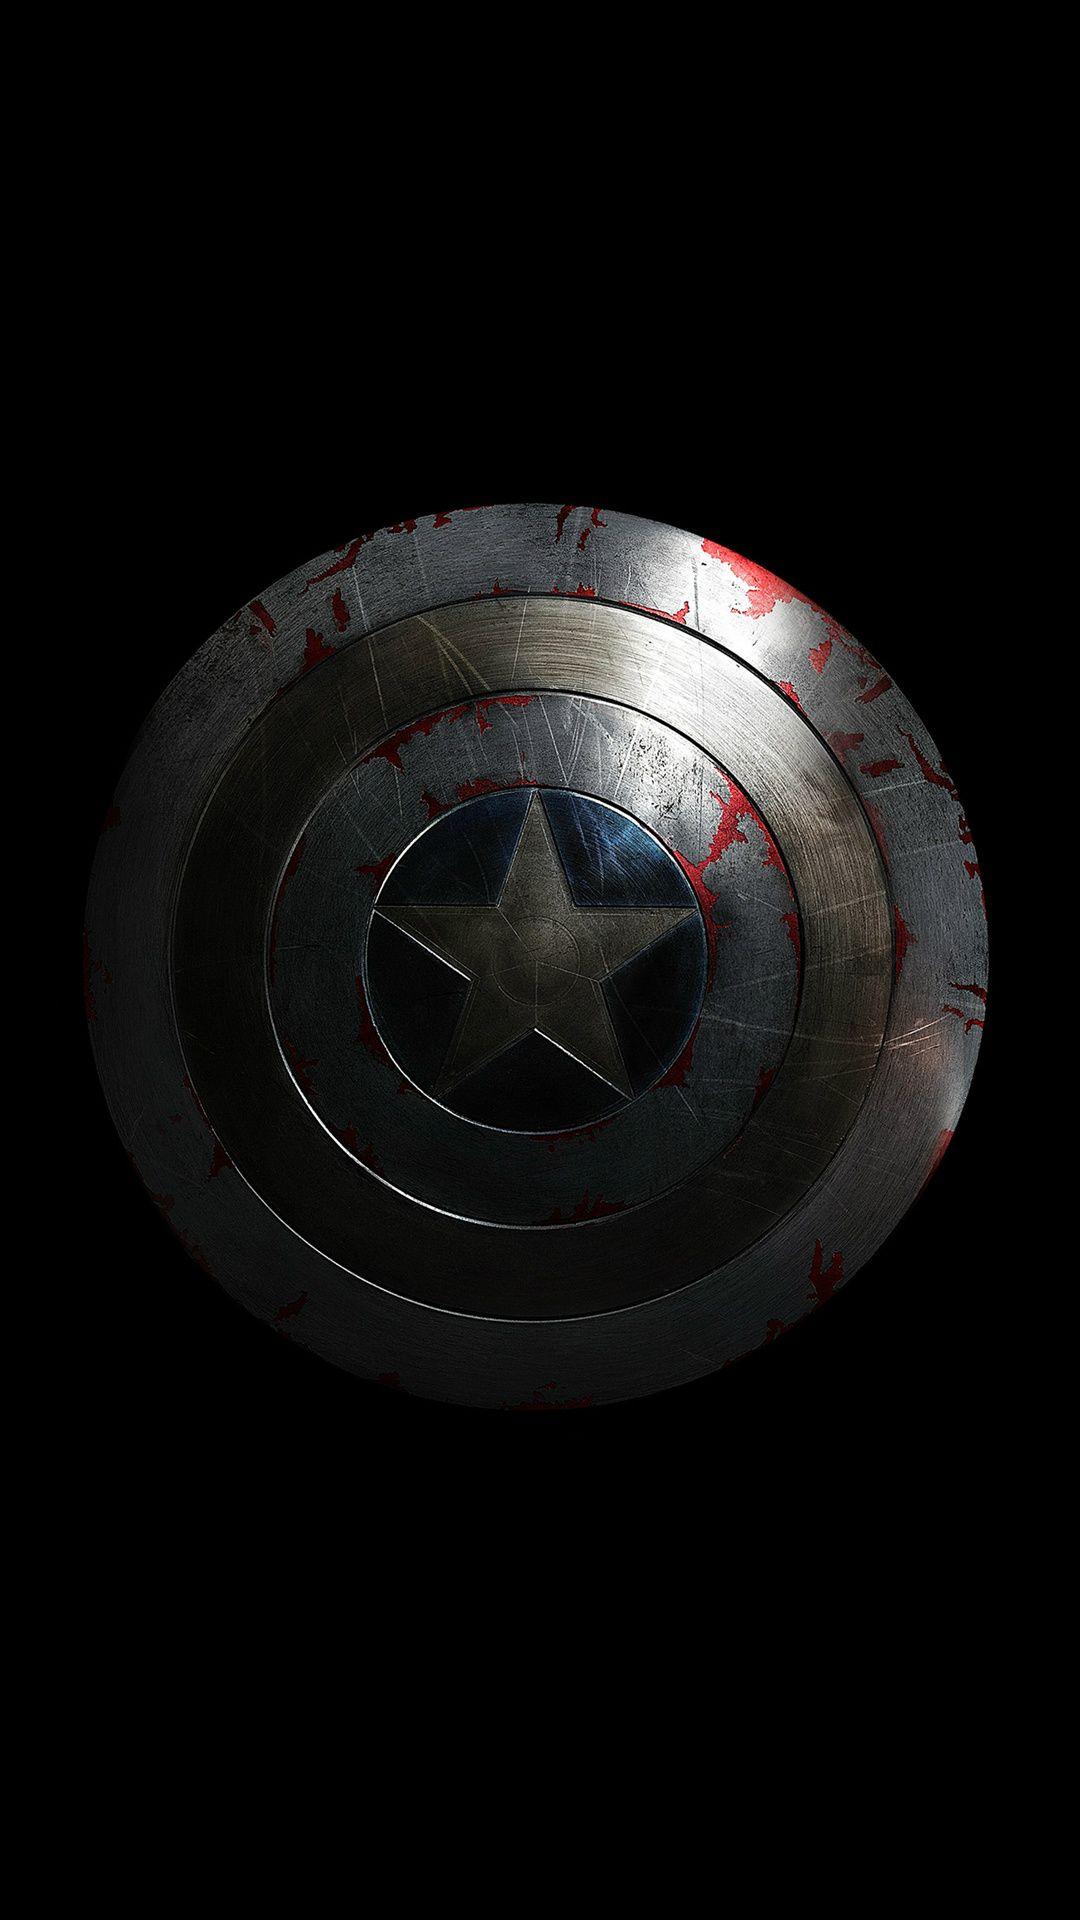 Captain America Avengers Hero Sheild Small Dark iPhone 6 Wallpaper Download. iPh. Avengers wallpaper, Captain america shield wallpaper, Captain america wallpaper